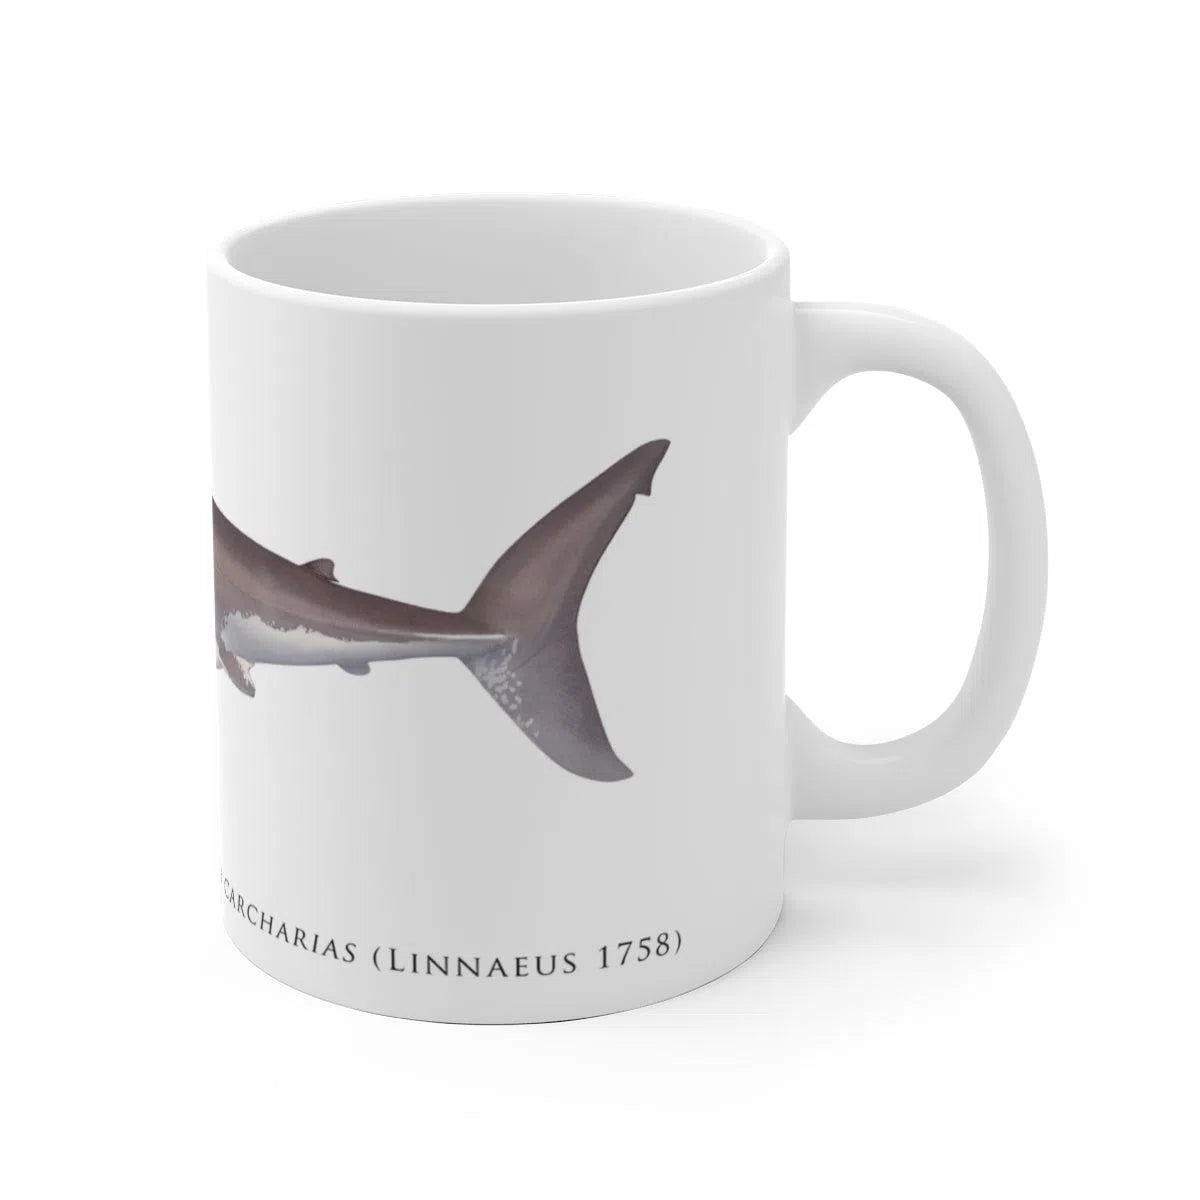 Great White Shark Mug-Stick Figure Fish Illustration